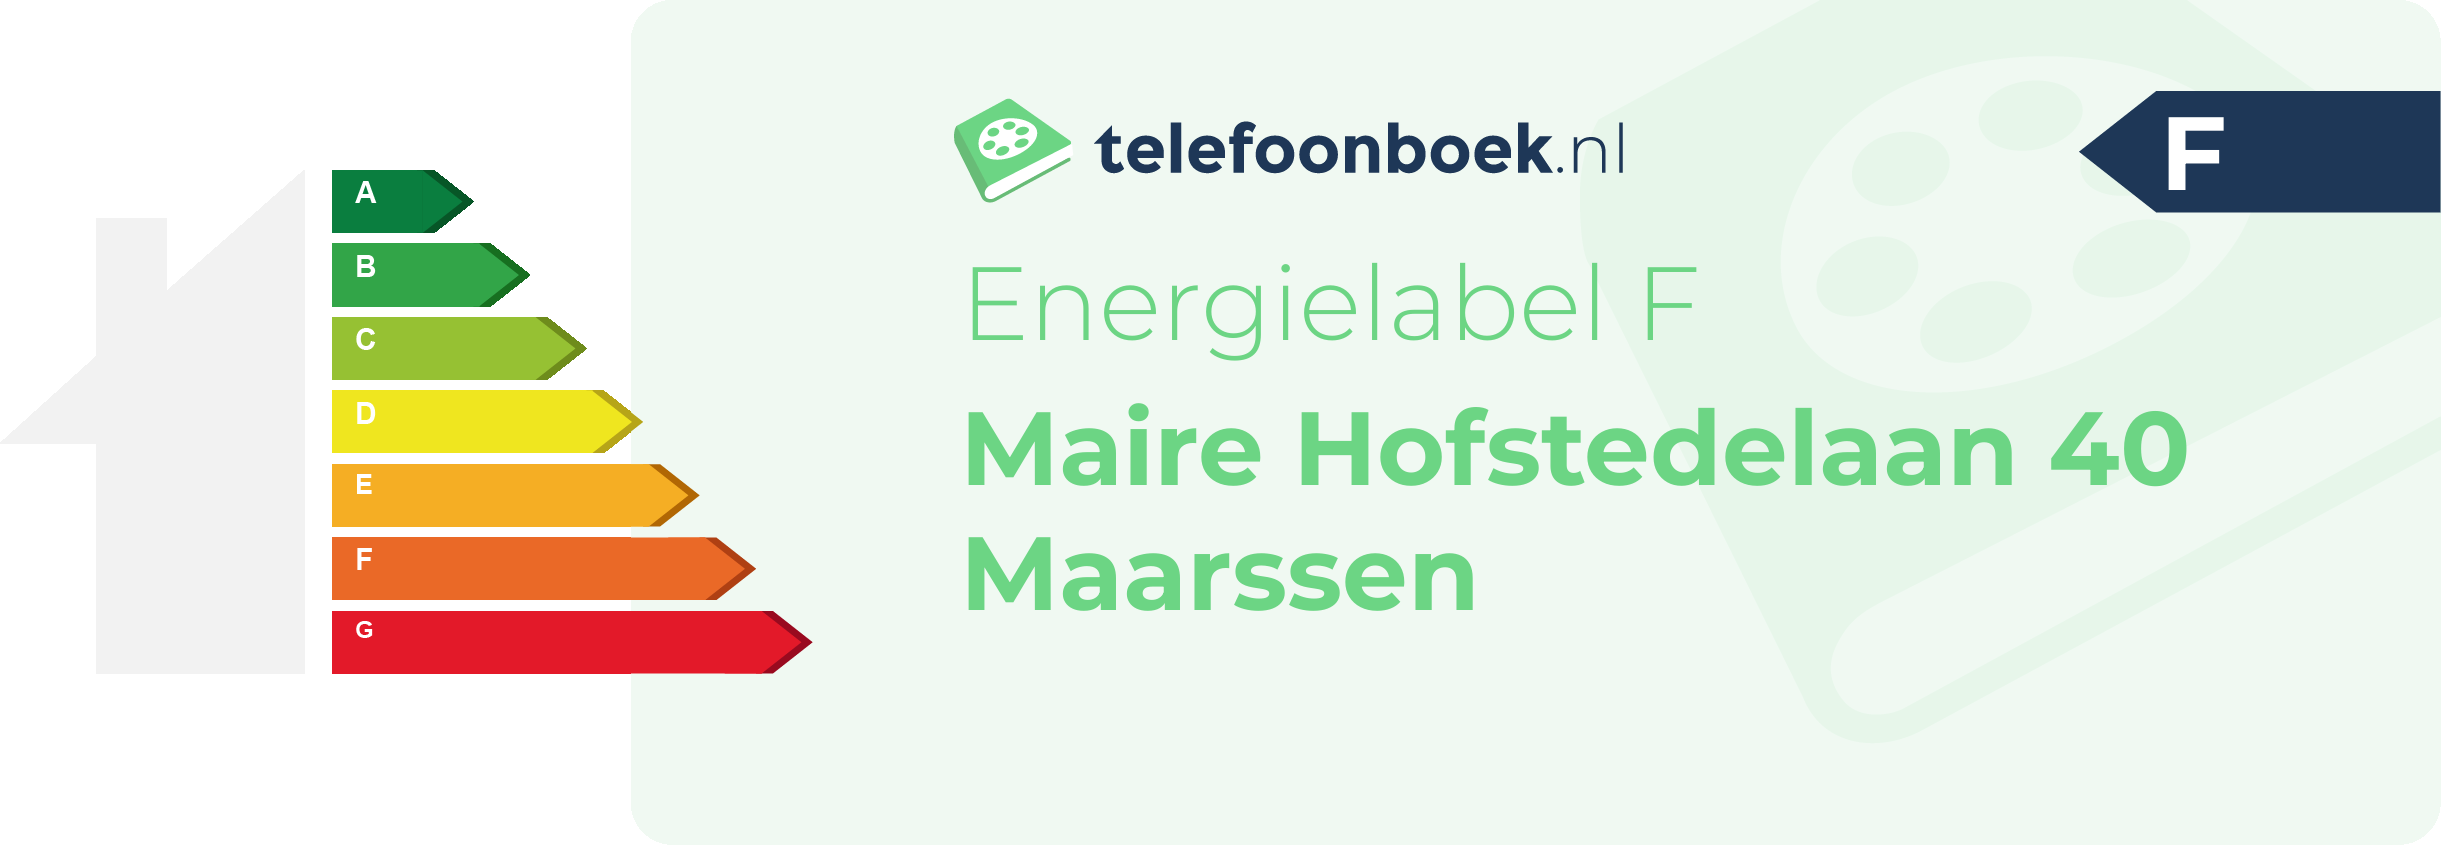 Energielabel Maire Hofstedelaan 40 Maarssen